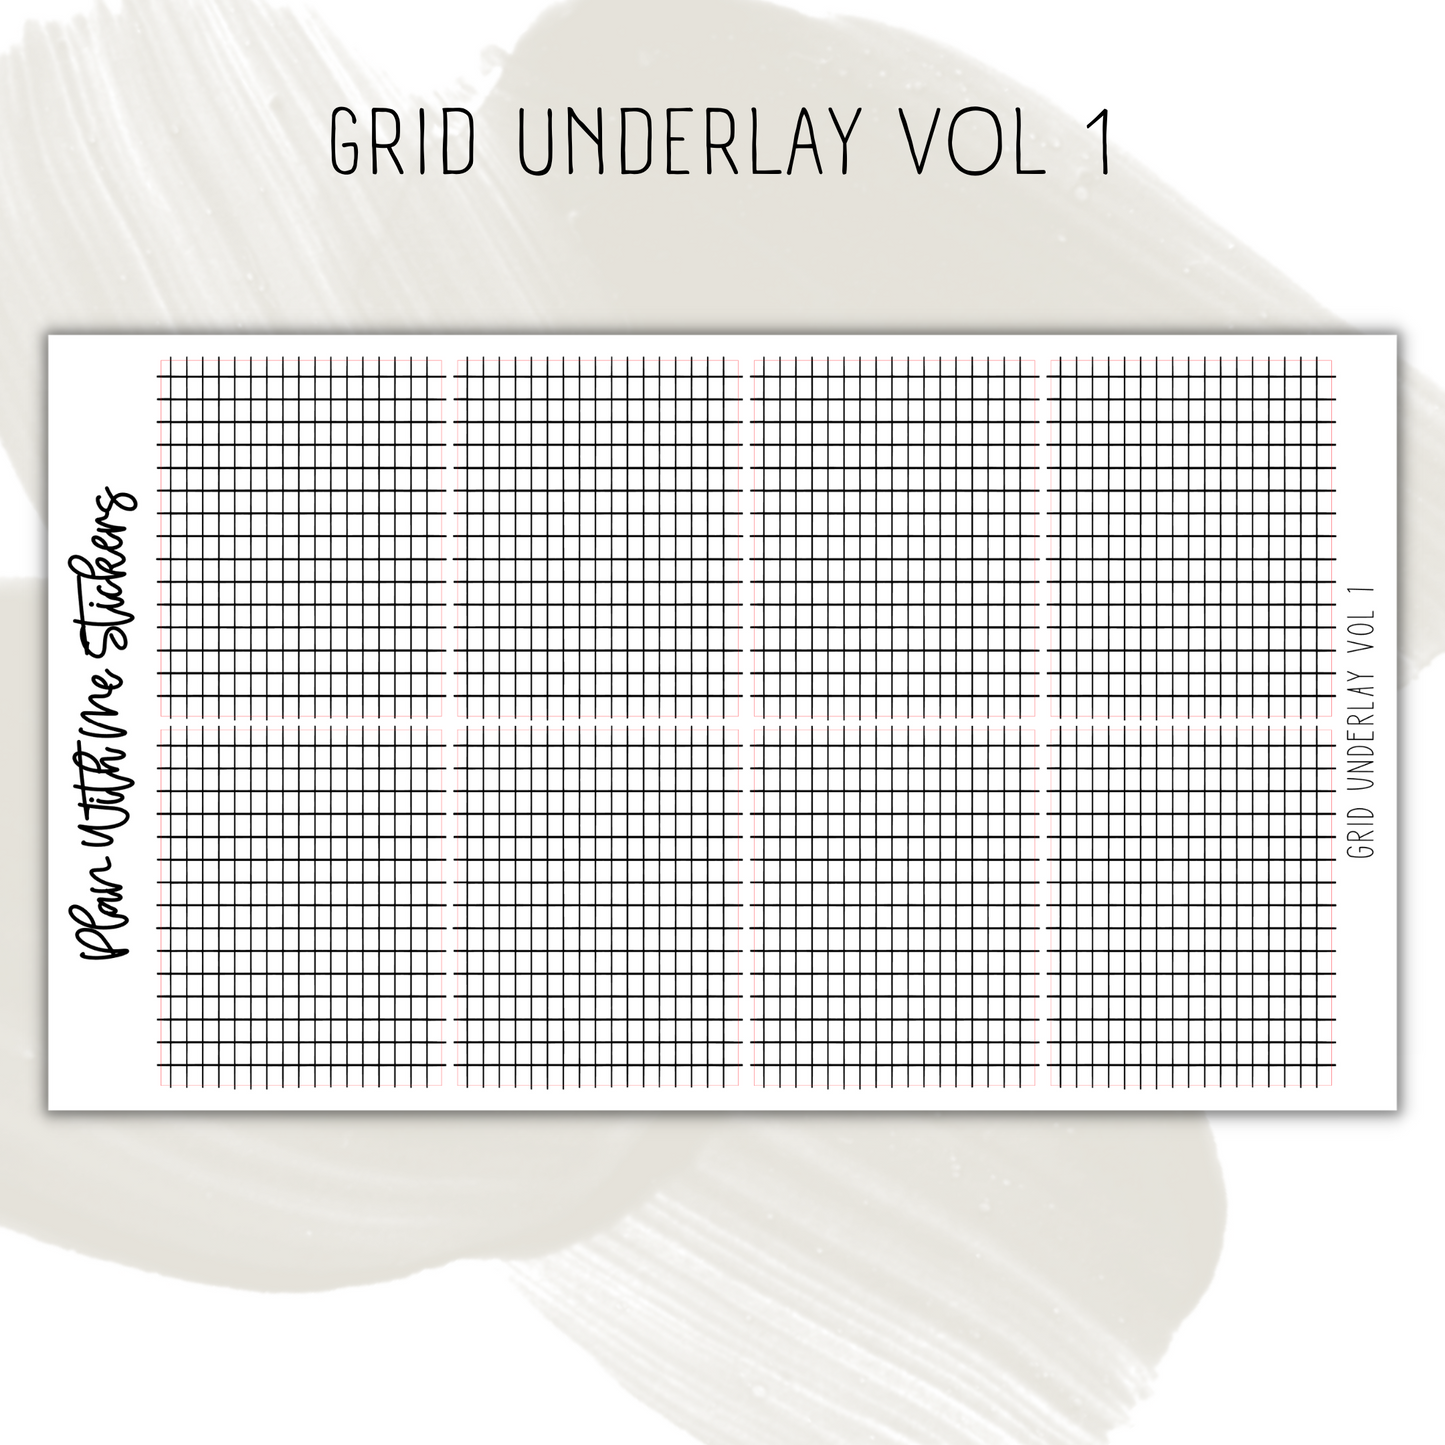 Grid Underlay Vol 1